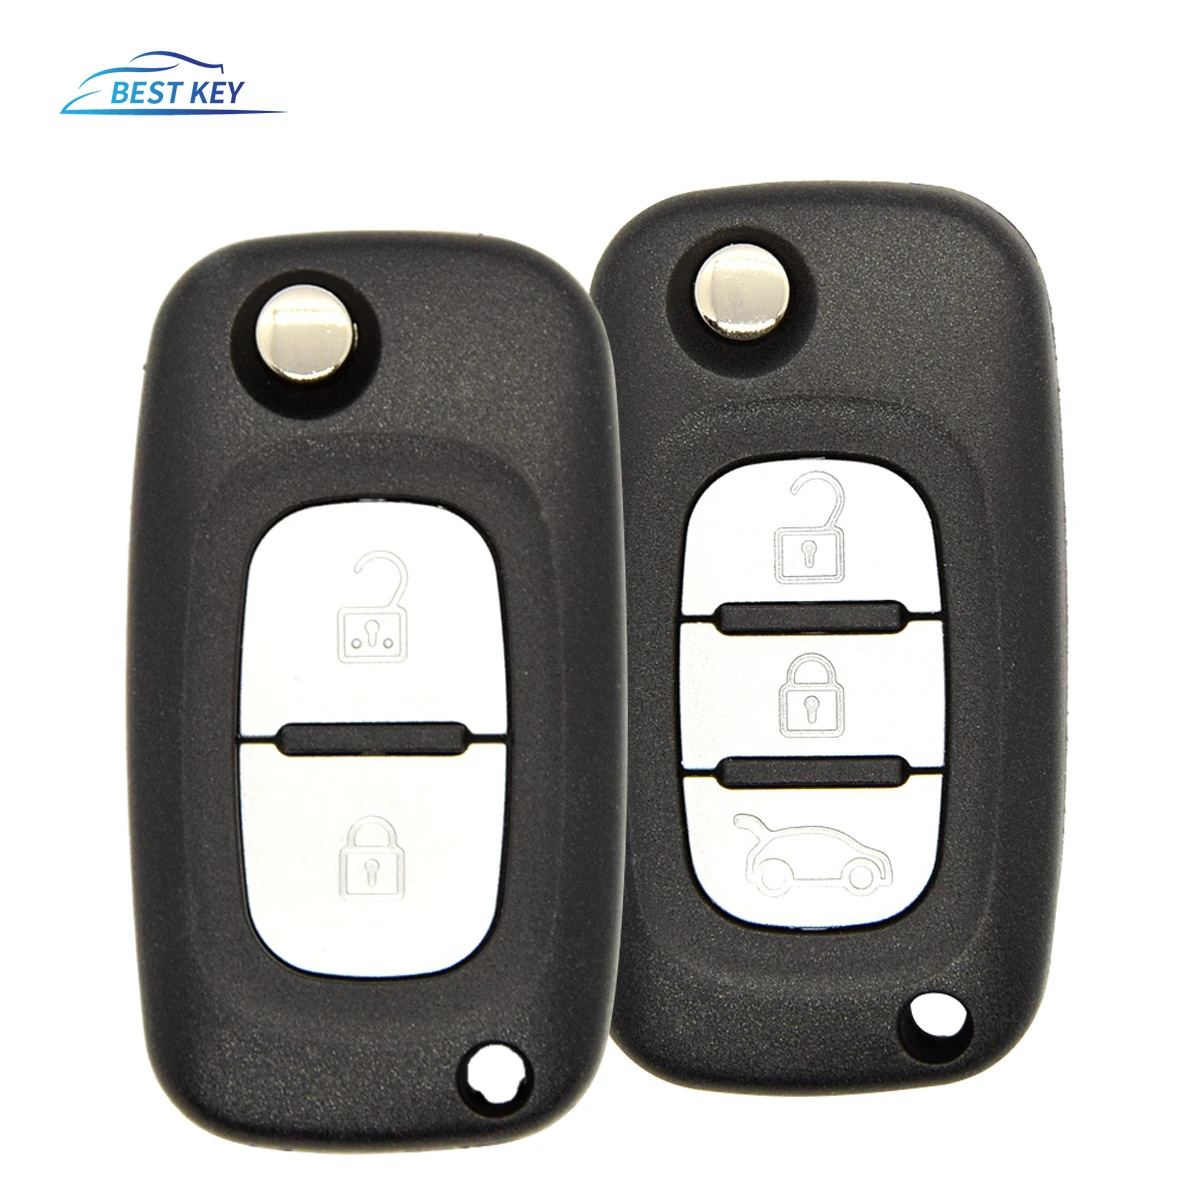 

BEST KEY Filp Car Remote Key Case shell for Renault Fluence Clio Megane Kangoo Modus Auto Key With NE73/VA2 Blade 2/3 Buttons